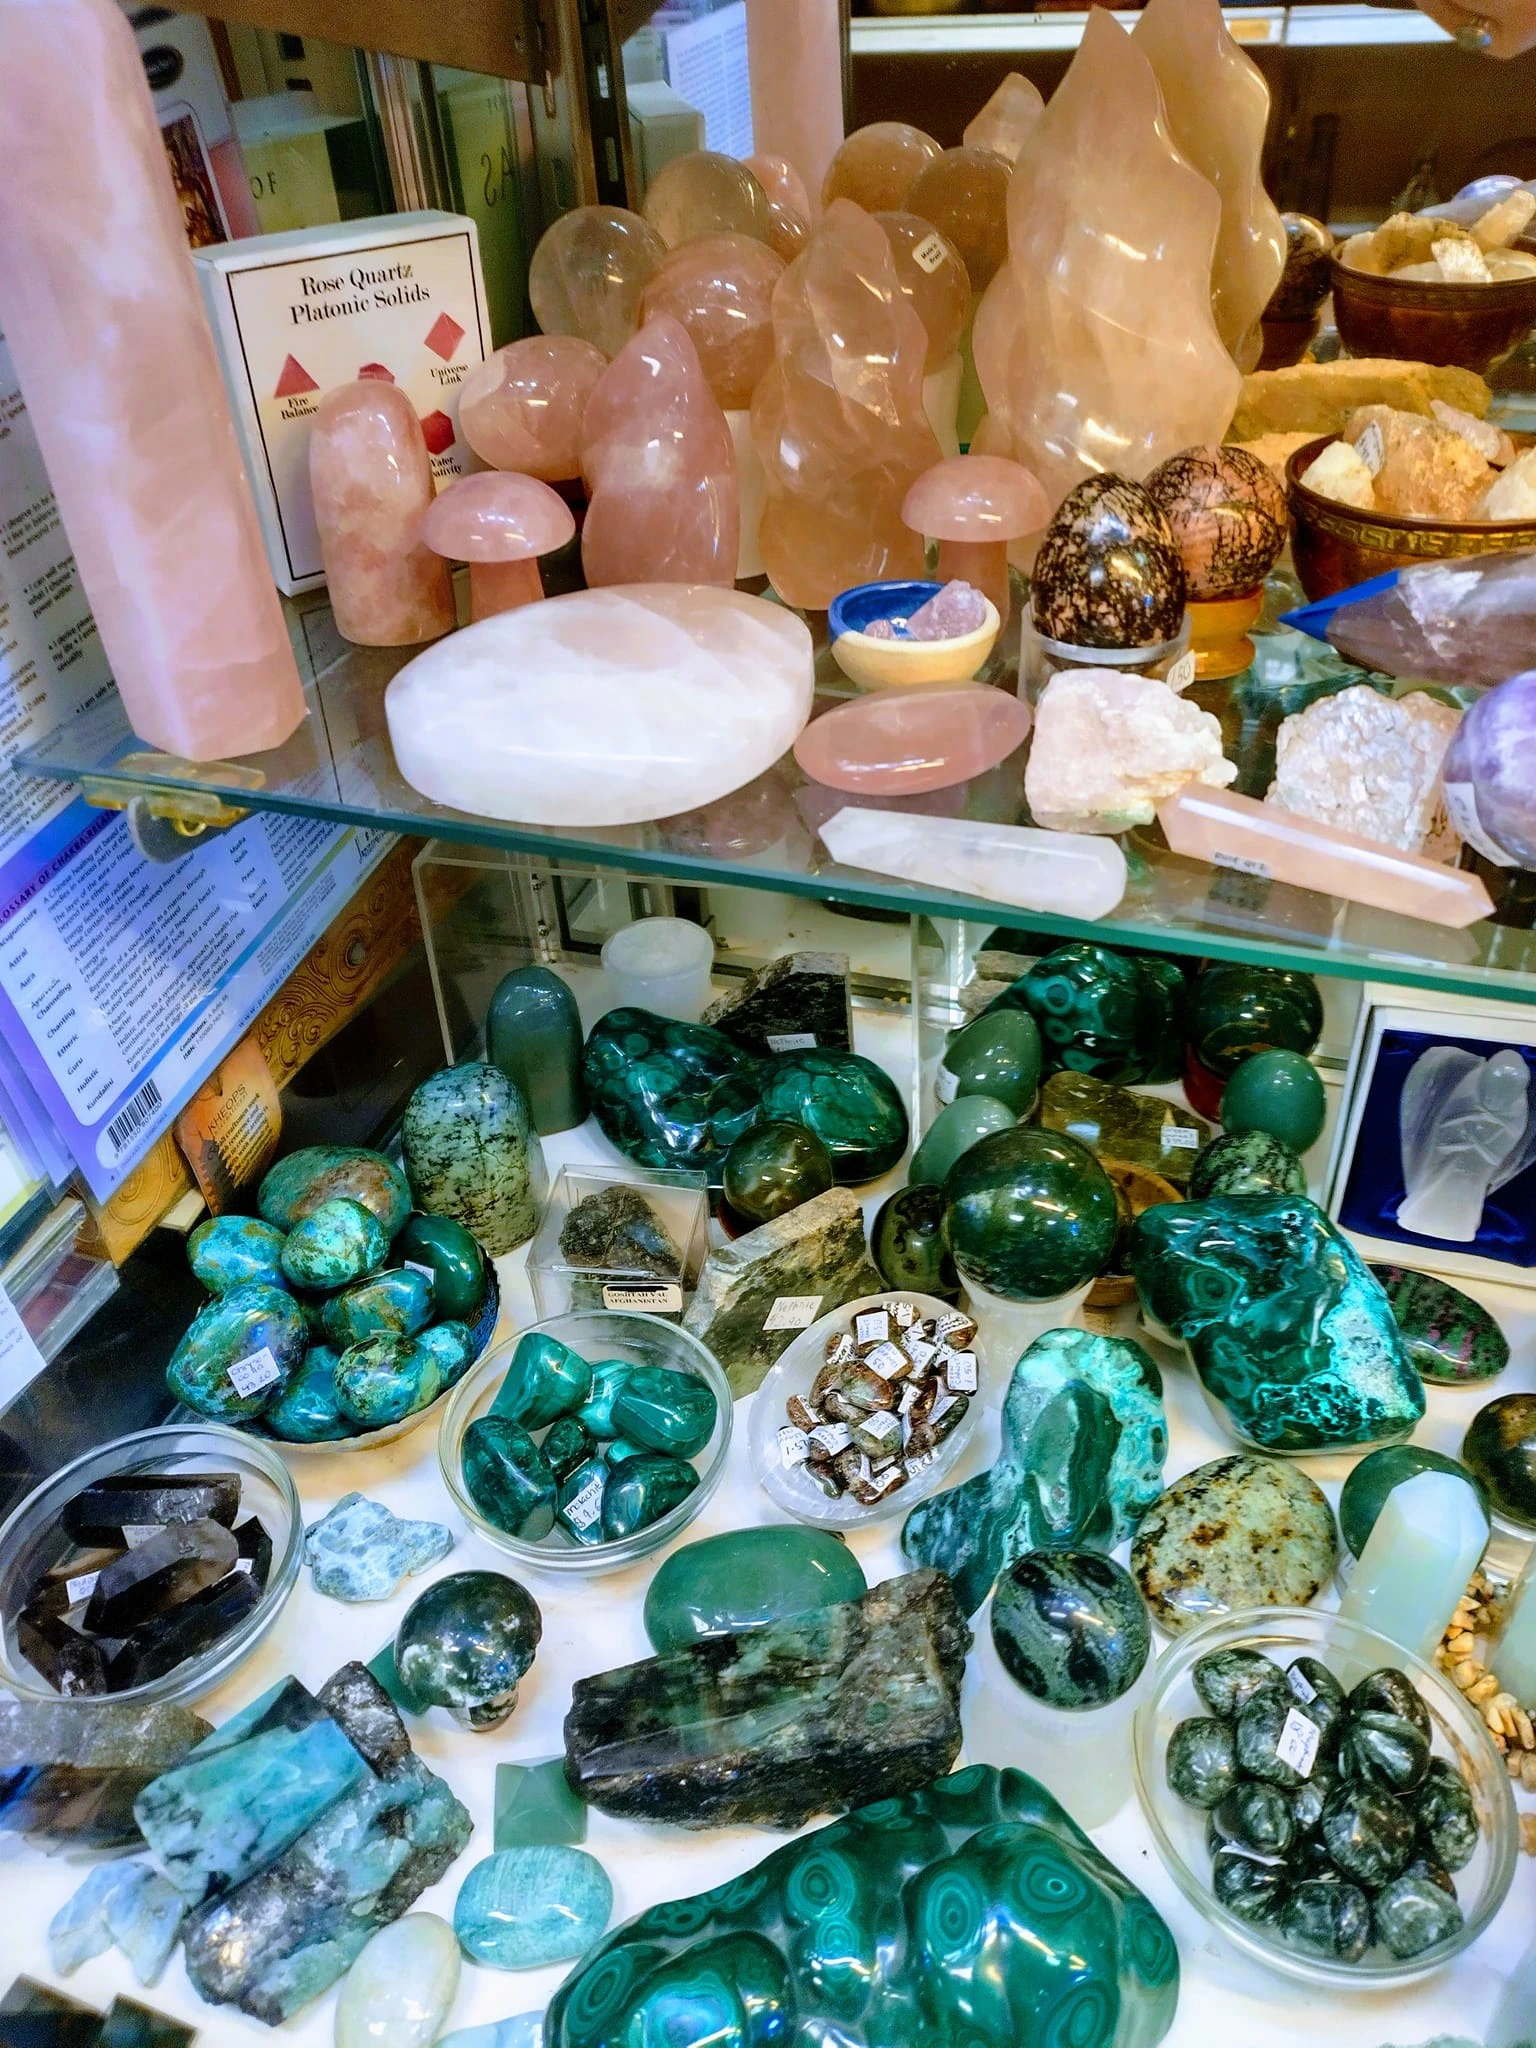 A display of crystals